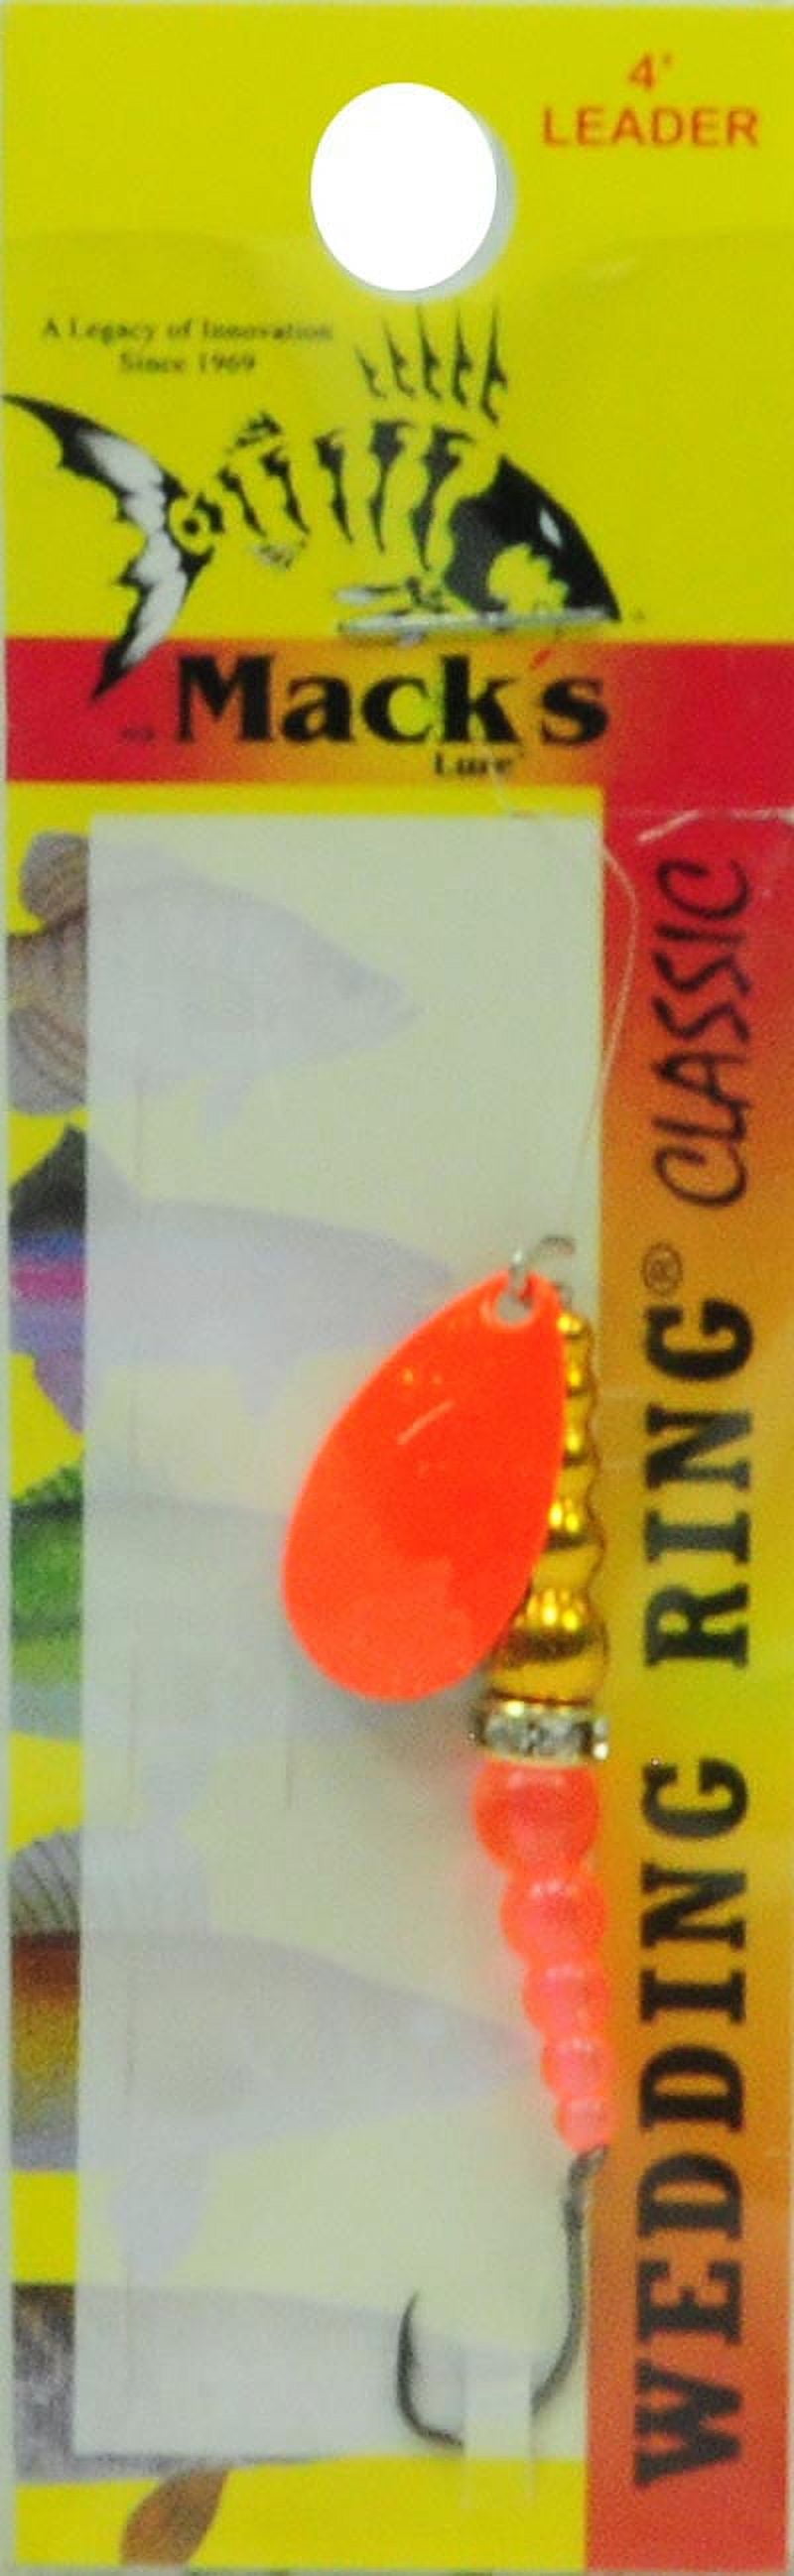 Mack's Lure Classic Wedding Ring Fishing Spinnerbait, Gold/Flo Fire Orange,  Size 6 Hook, Spinnerbaits